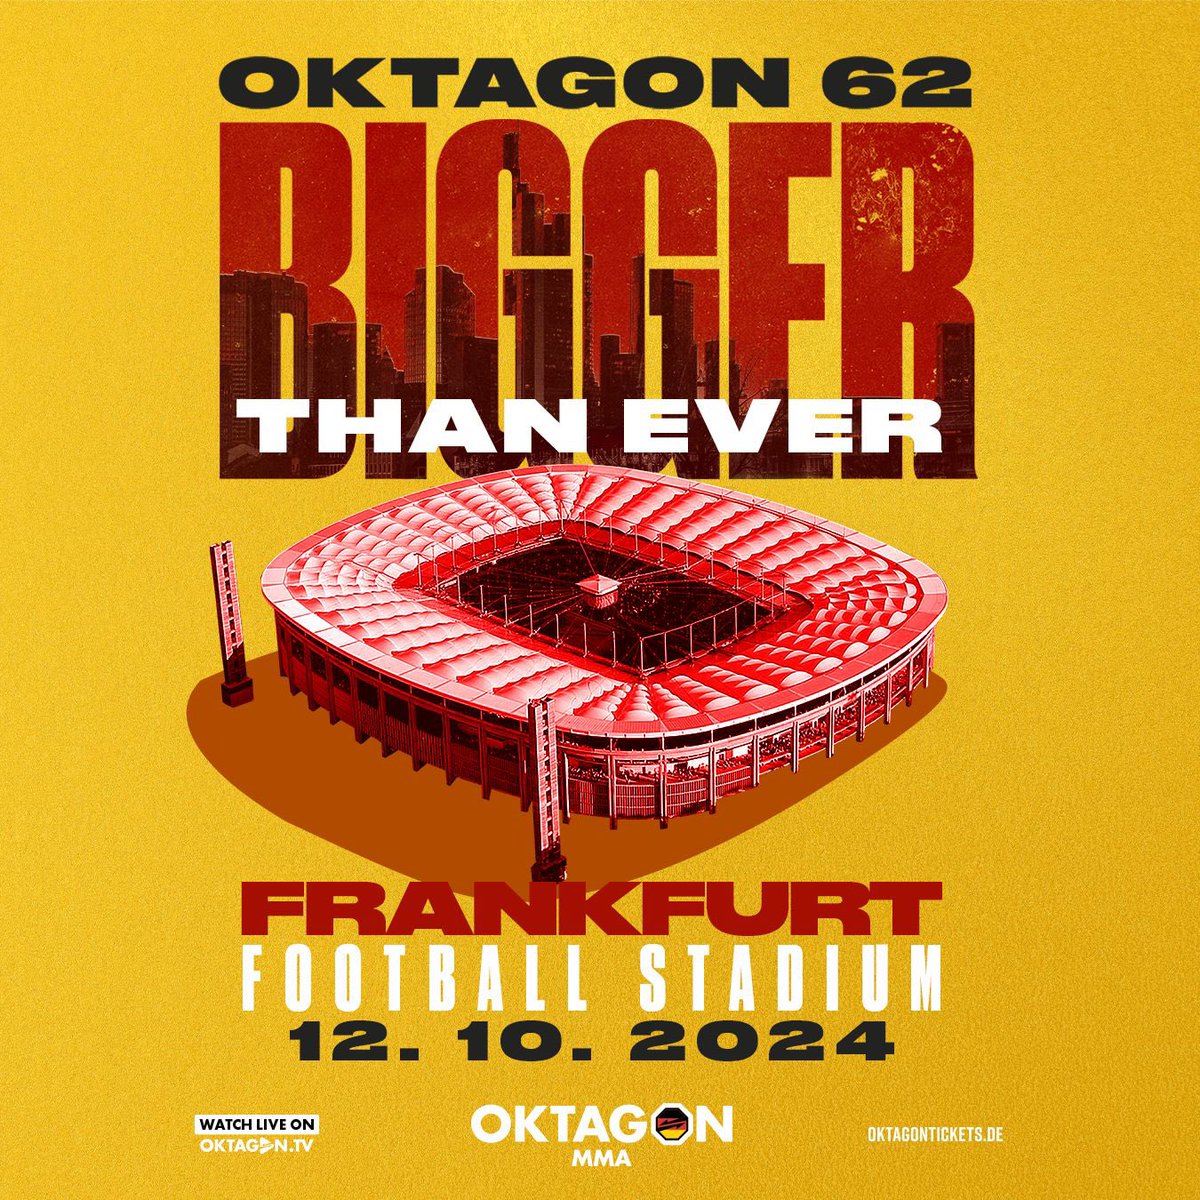 OKTAGON ON 55.000 STADIUM IN FRANKFURT! 🇩🇪 12.10.2024 @oktagonmma will rewrite the history! BIGGER THAN EVER!!! #OKTAGON62